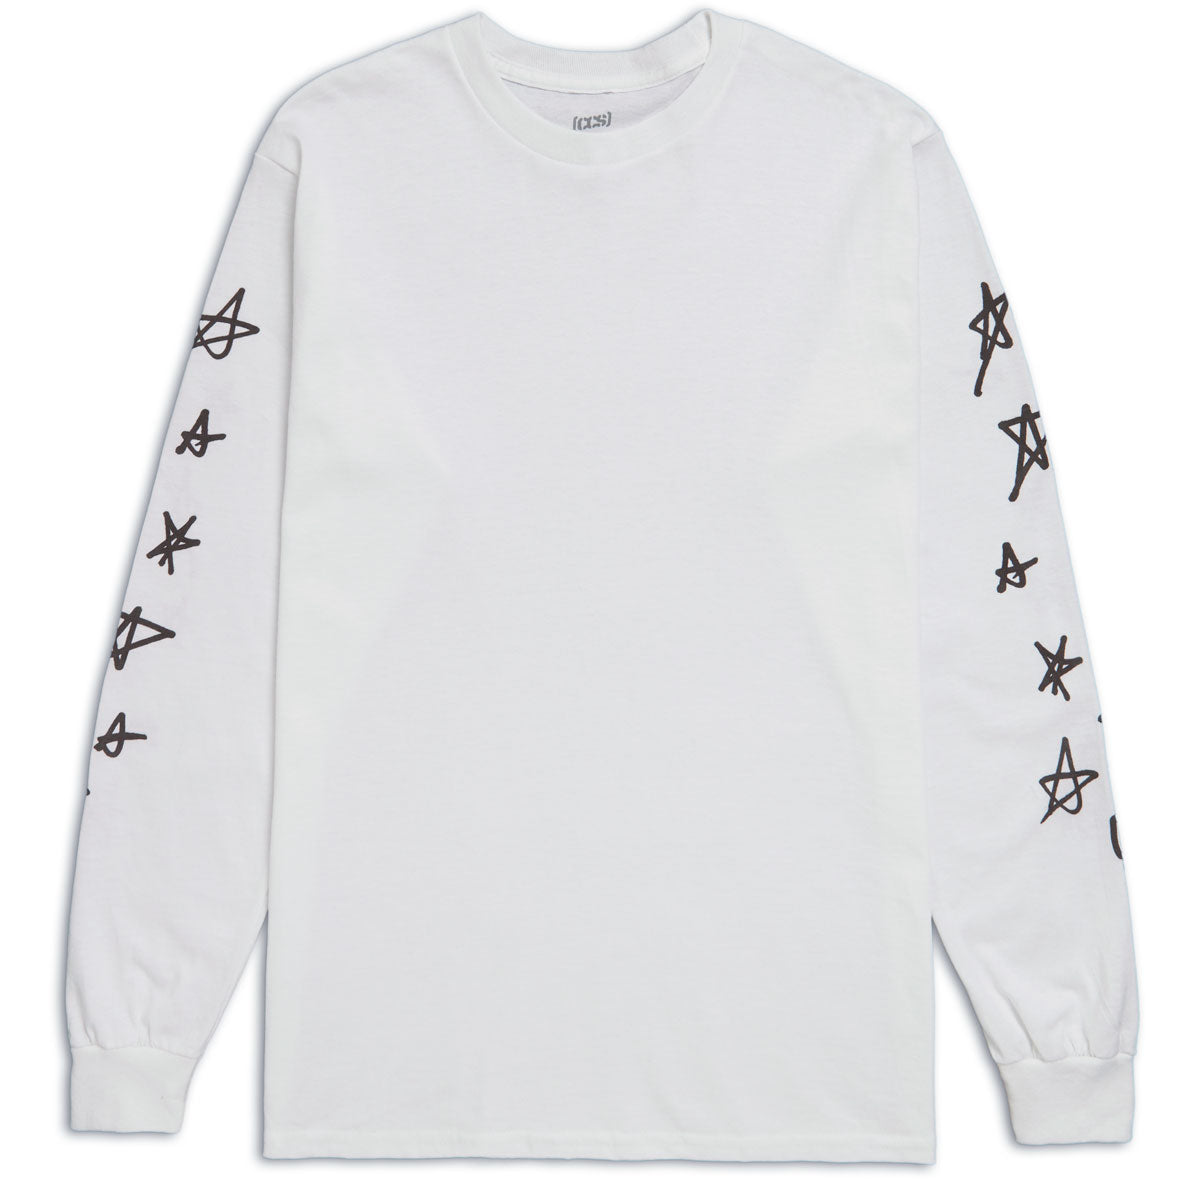 CCS Stars Long Sleeve T-Shirt - White/Black - MD image 1